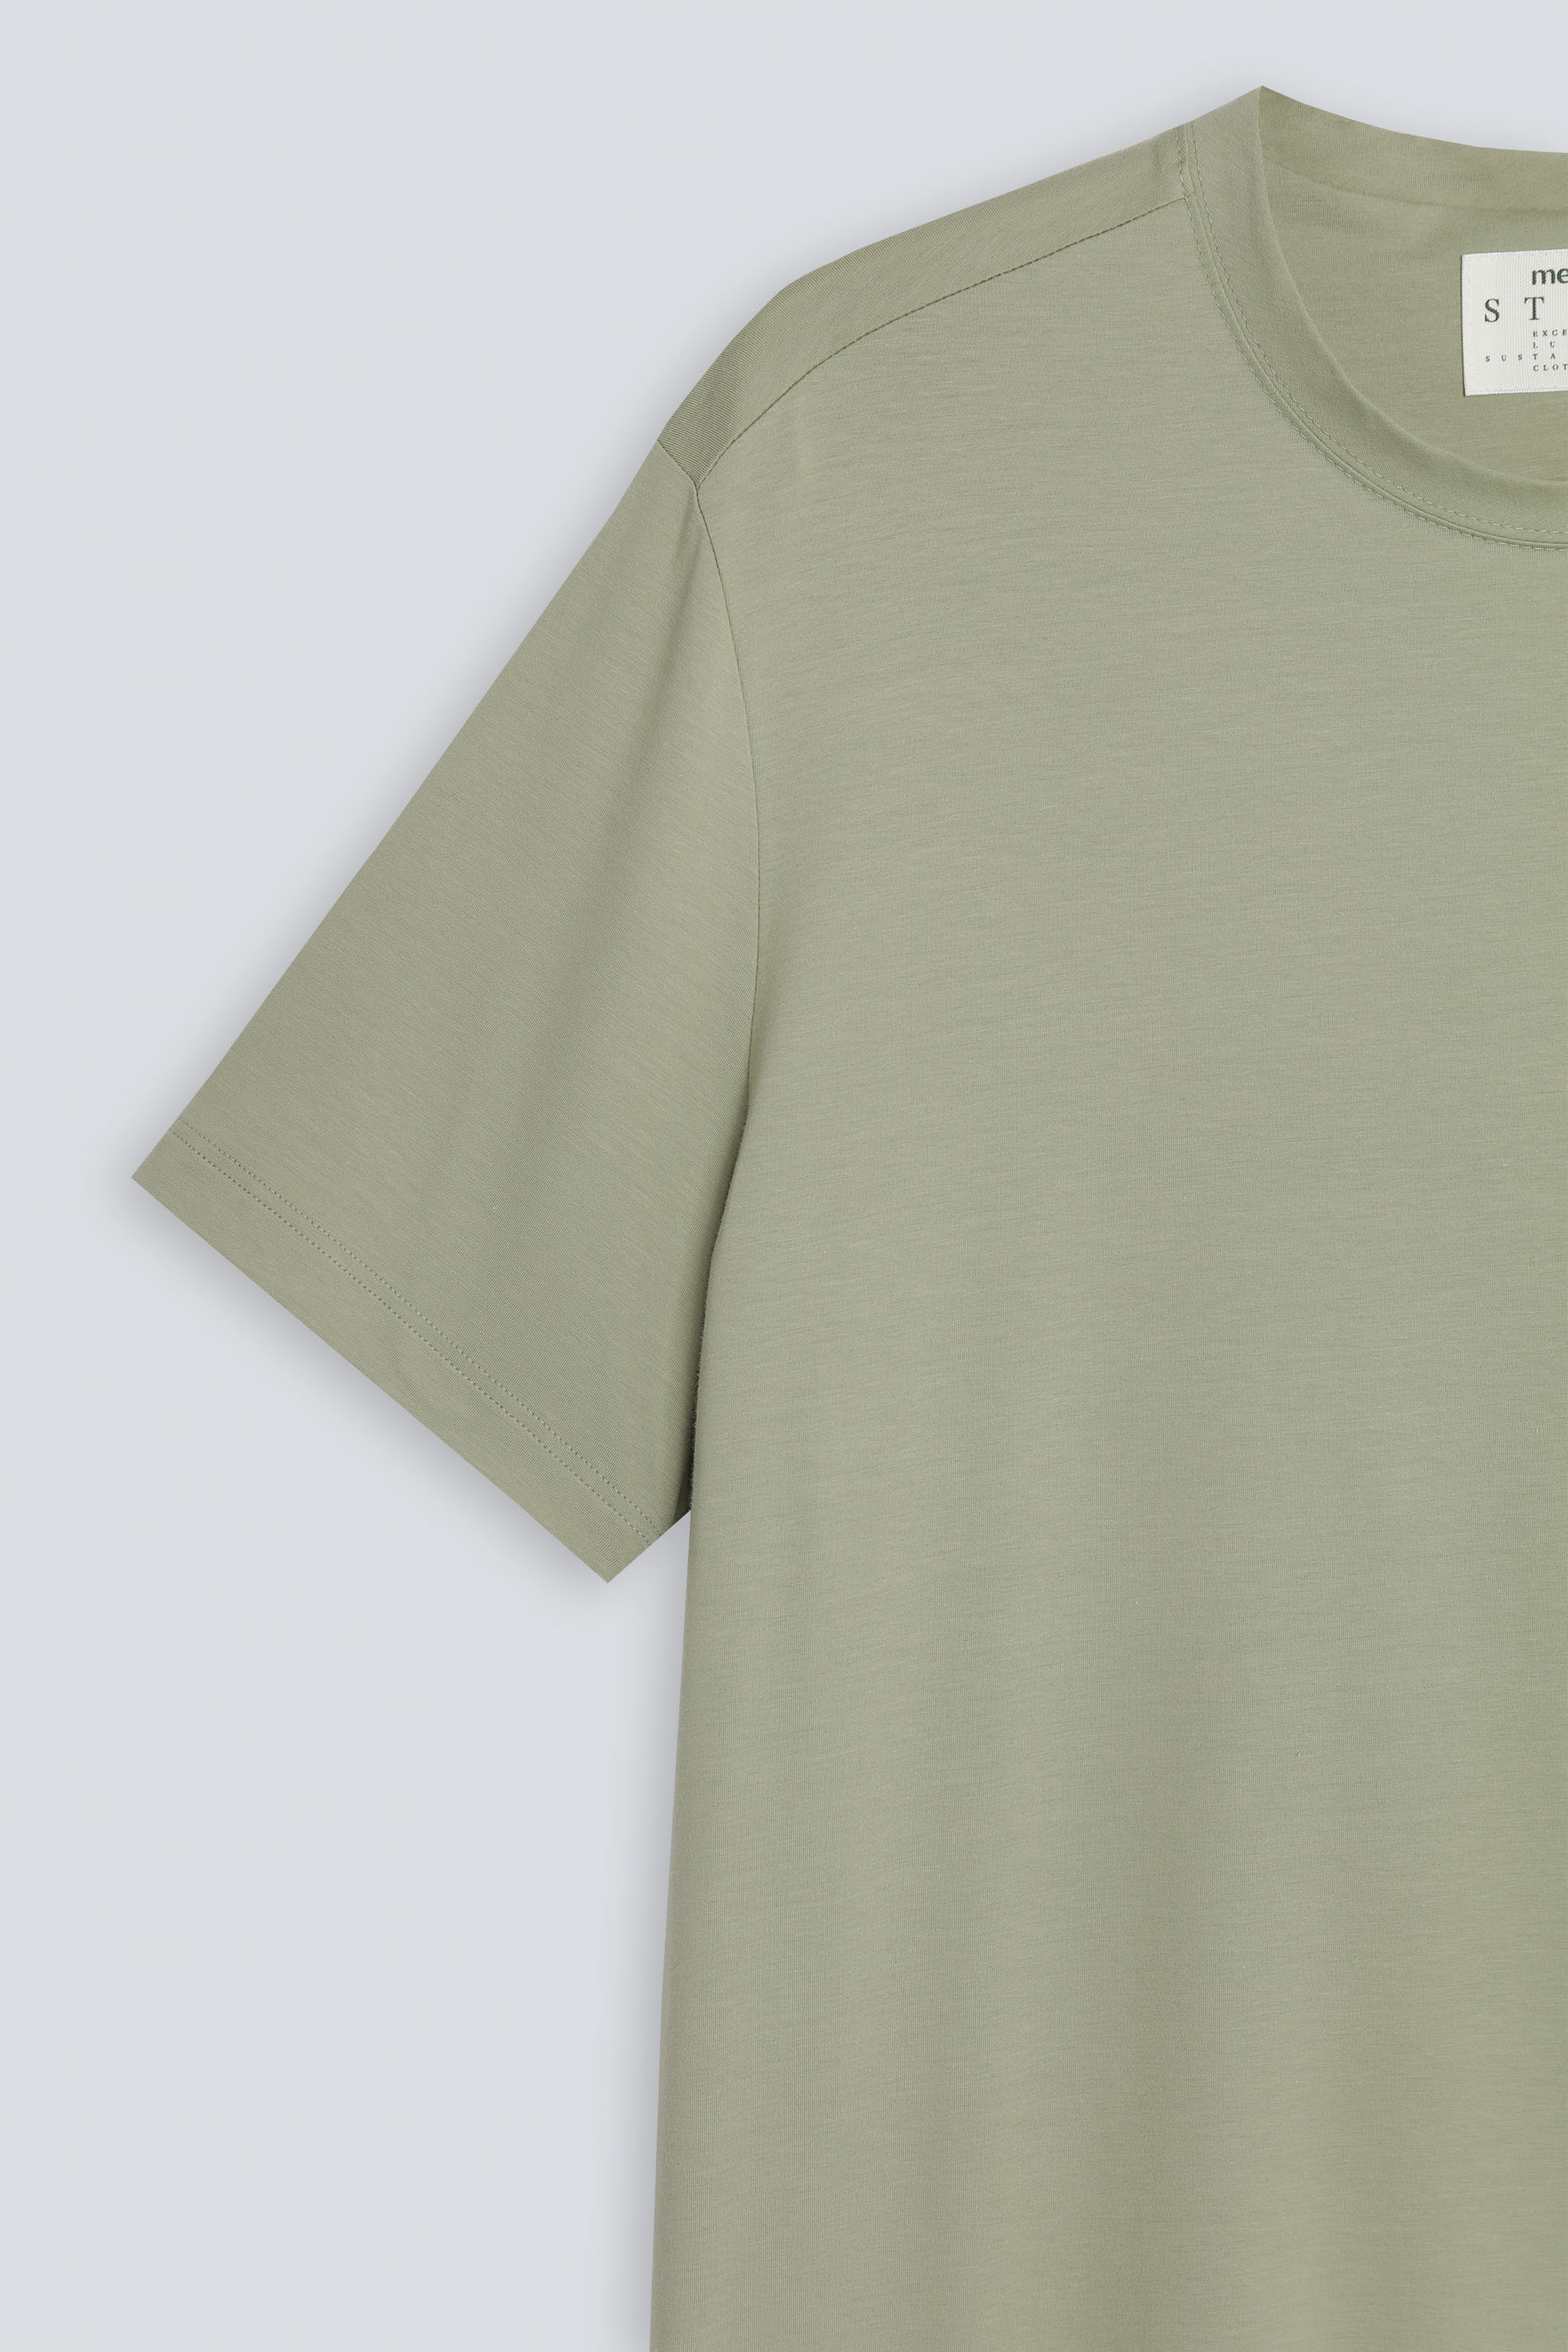 T-Shirt Serie Cotone Stretch Detailansicht 01 | mey®